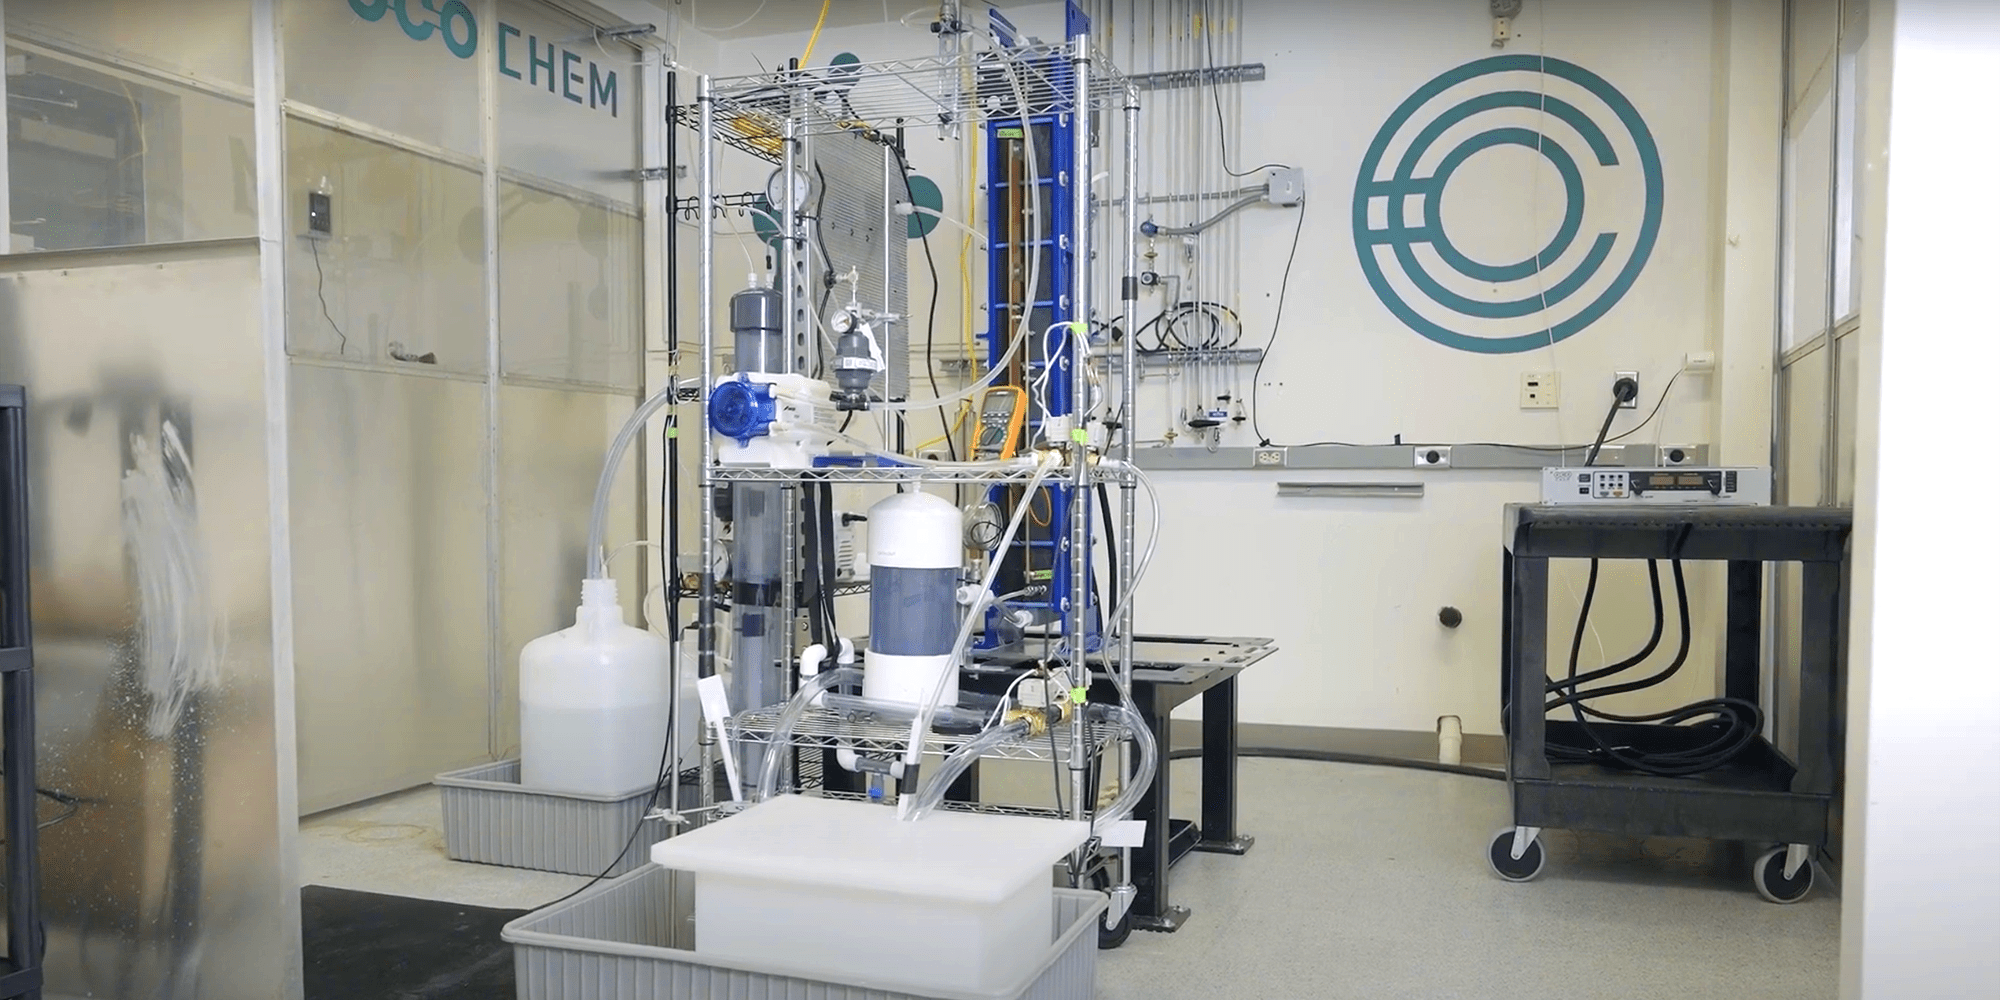 OCOchem wins $2.5M U.S. Department of Energy “Hydrogen Shot” grant to advance clean hydrogen technologies